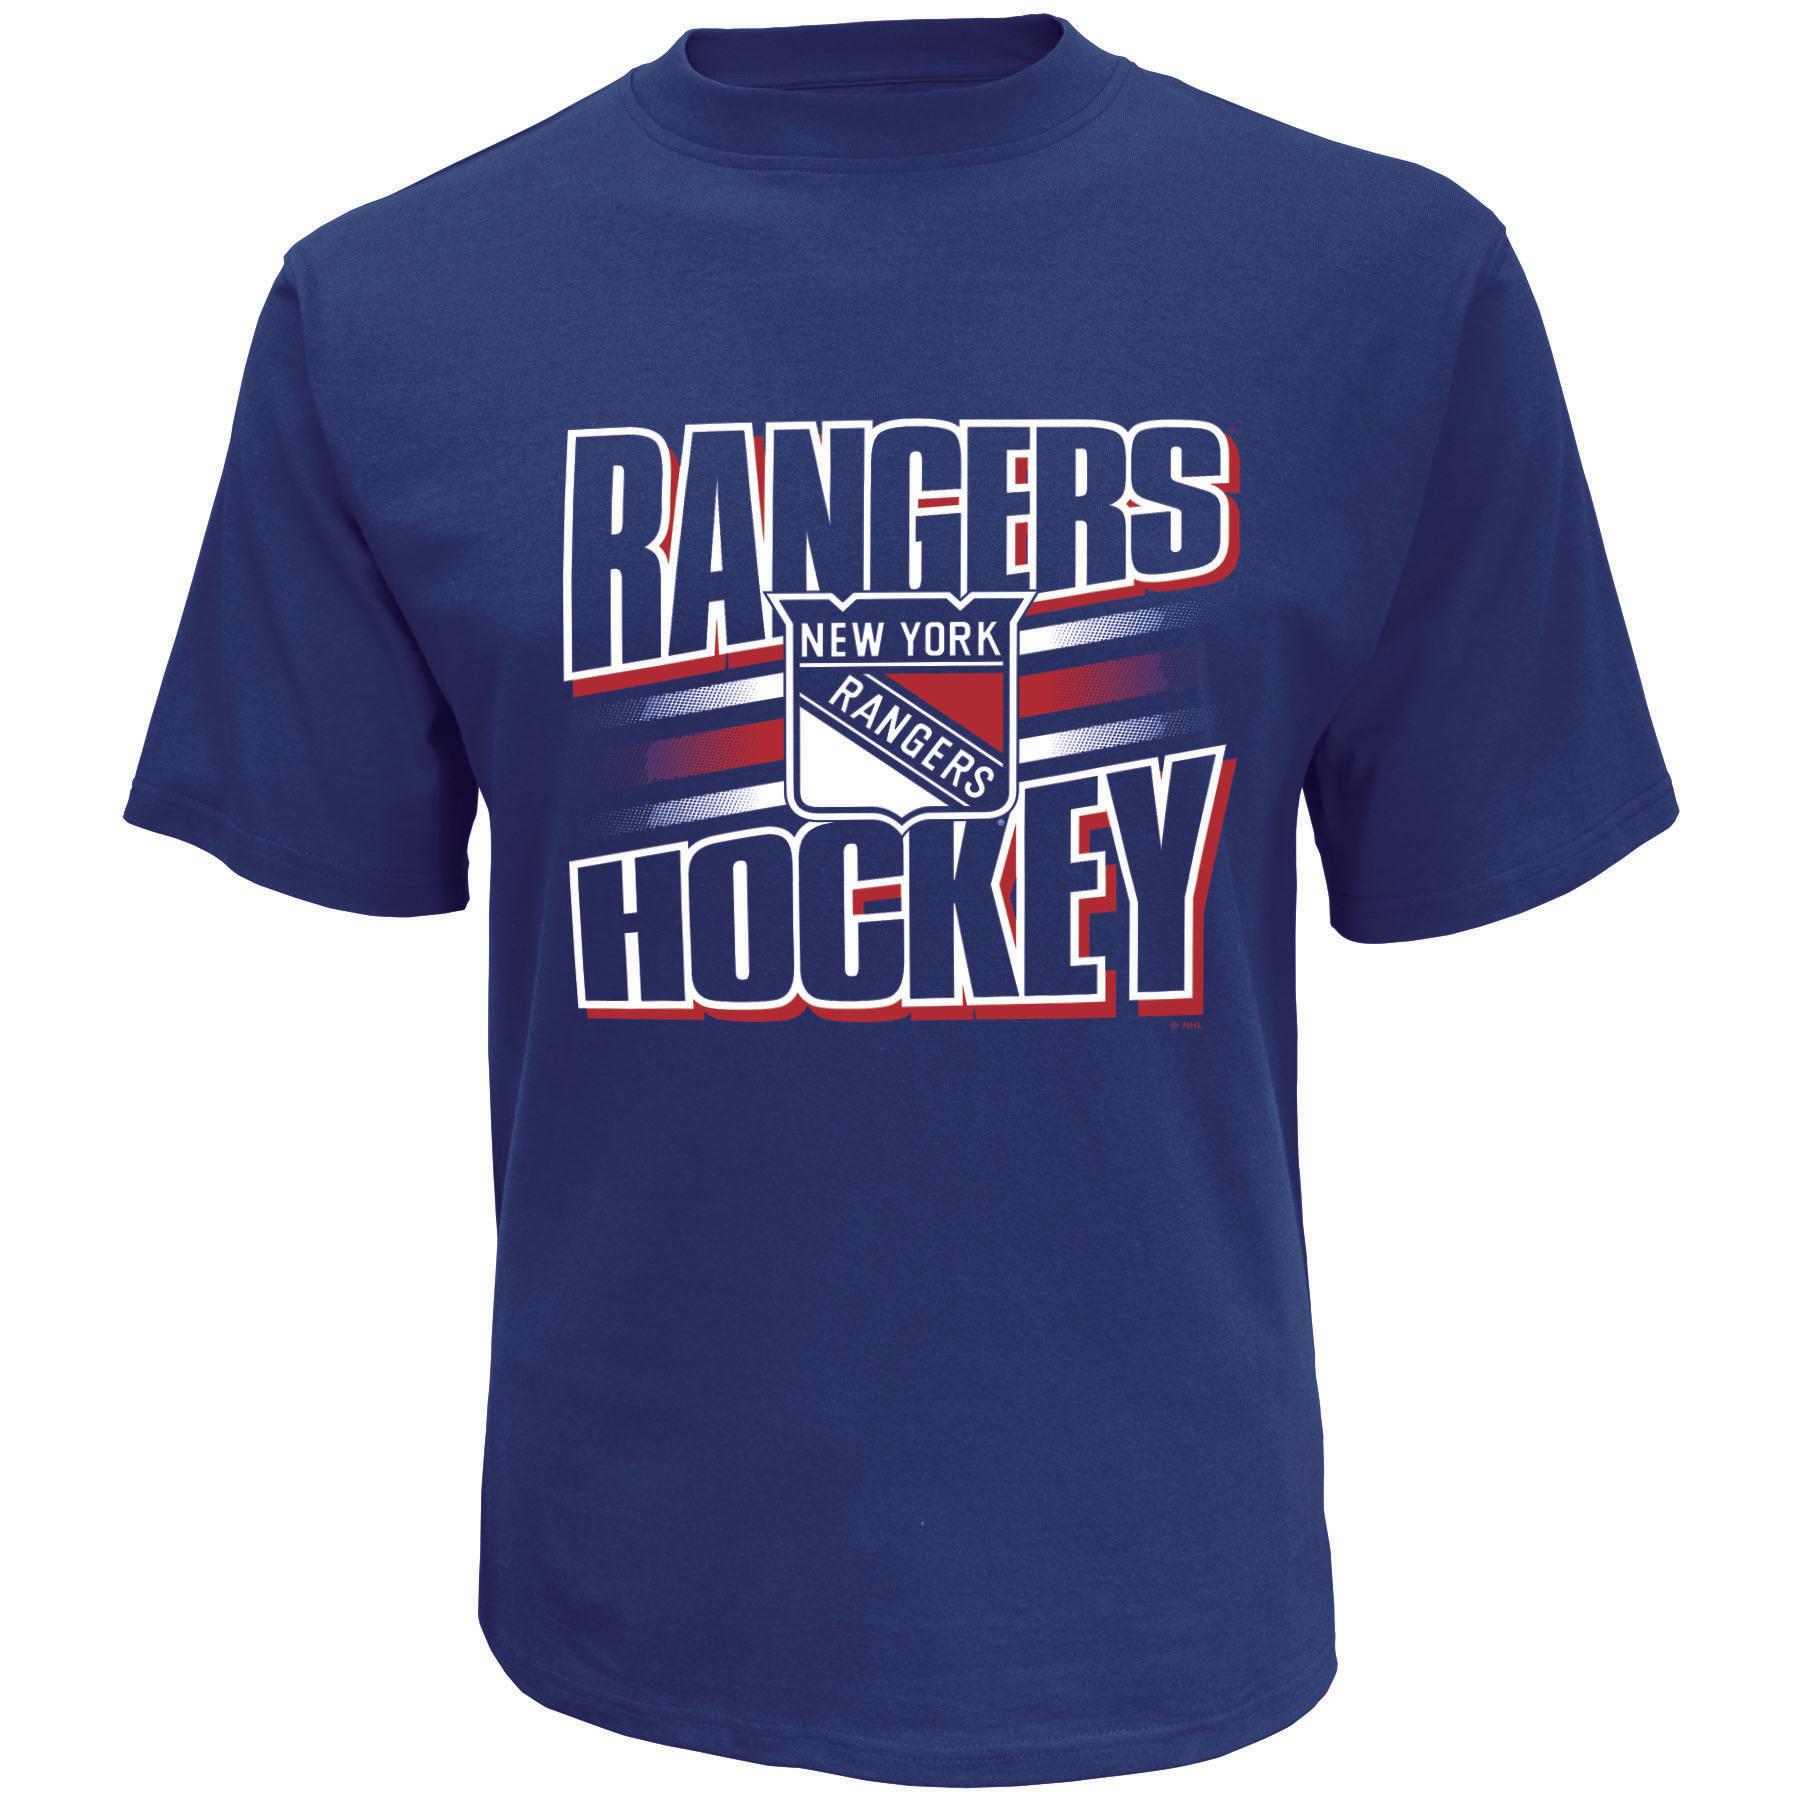 NHL Men's Big & Tall Graphic T-Shirt - New York Rangers